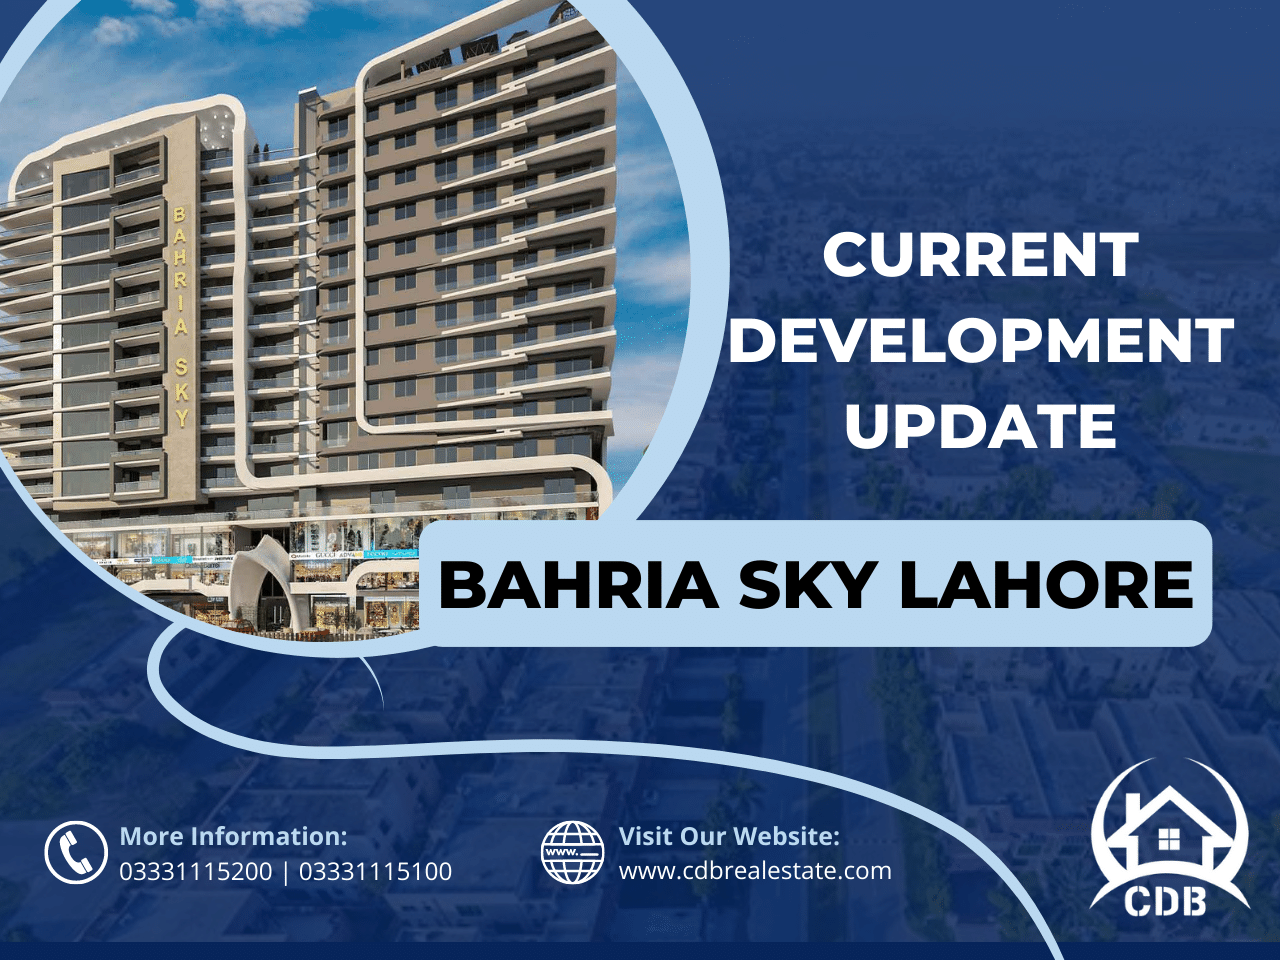 Bahria Sky Lahore Current Development